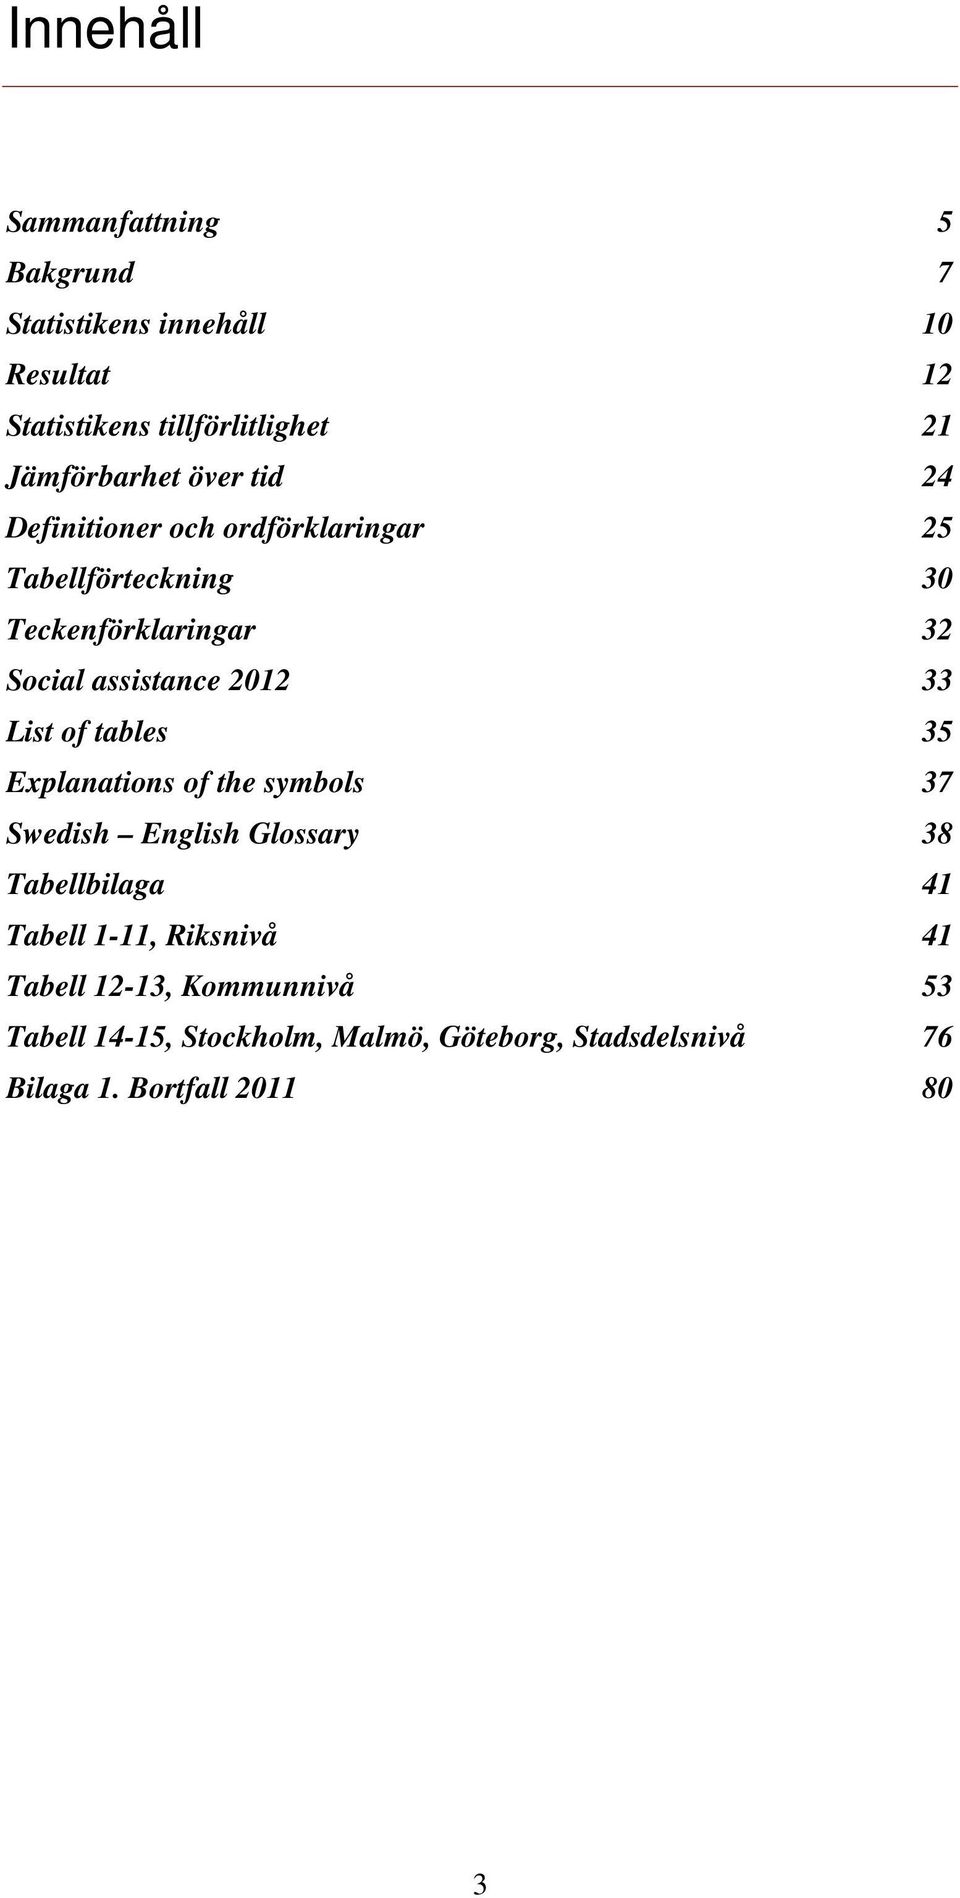 assistance 2012 33 List of tables 35 Explanations of the symbols 37 Swedish English Glossary 38 Tabellbilaga 41